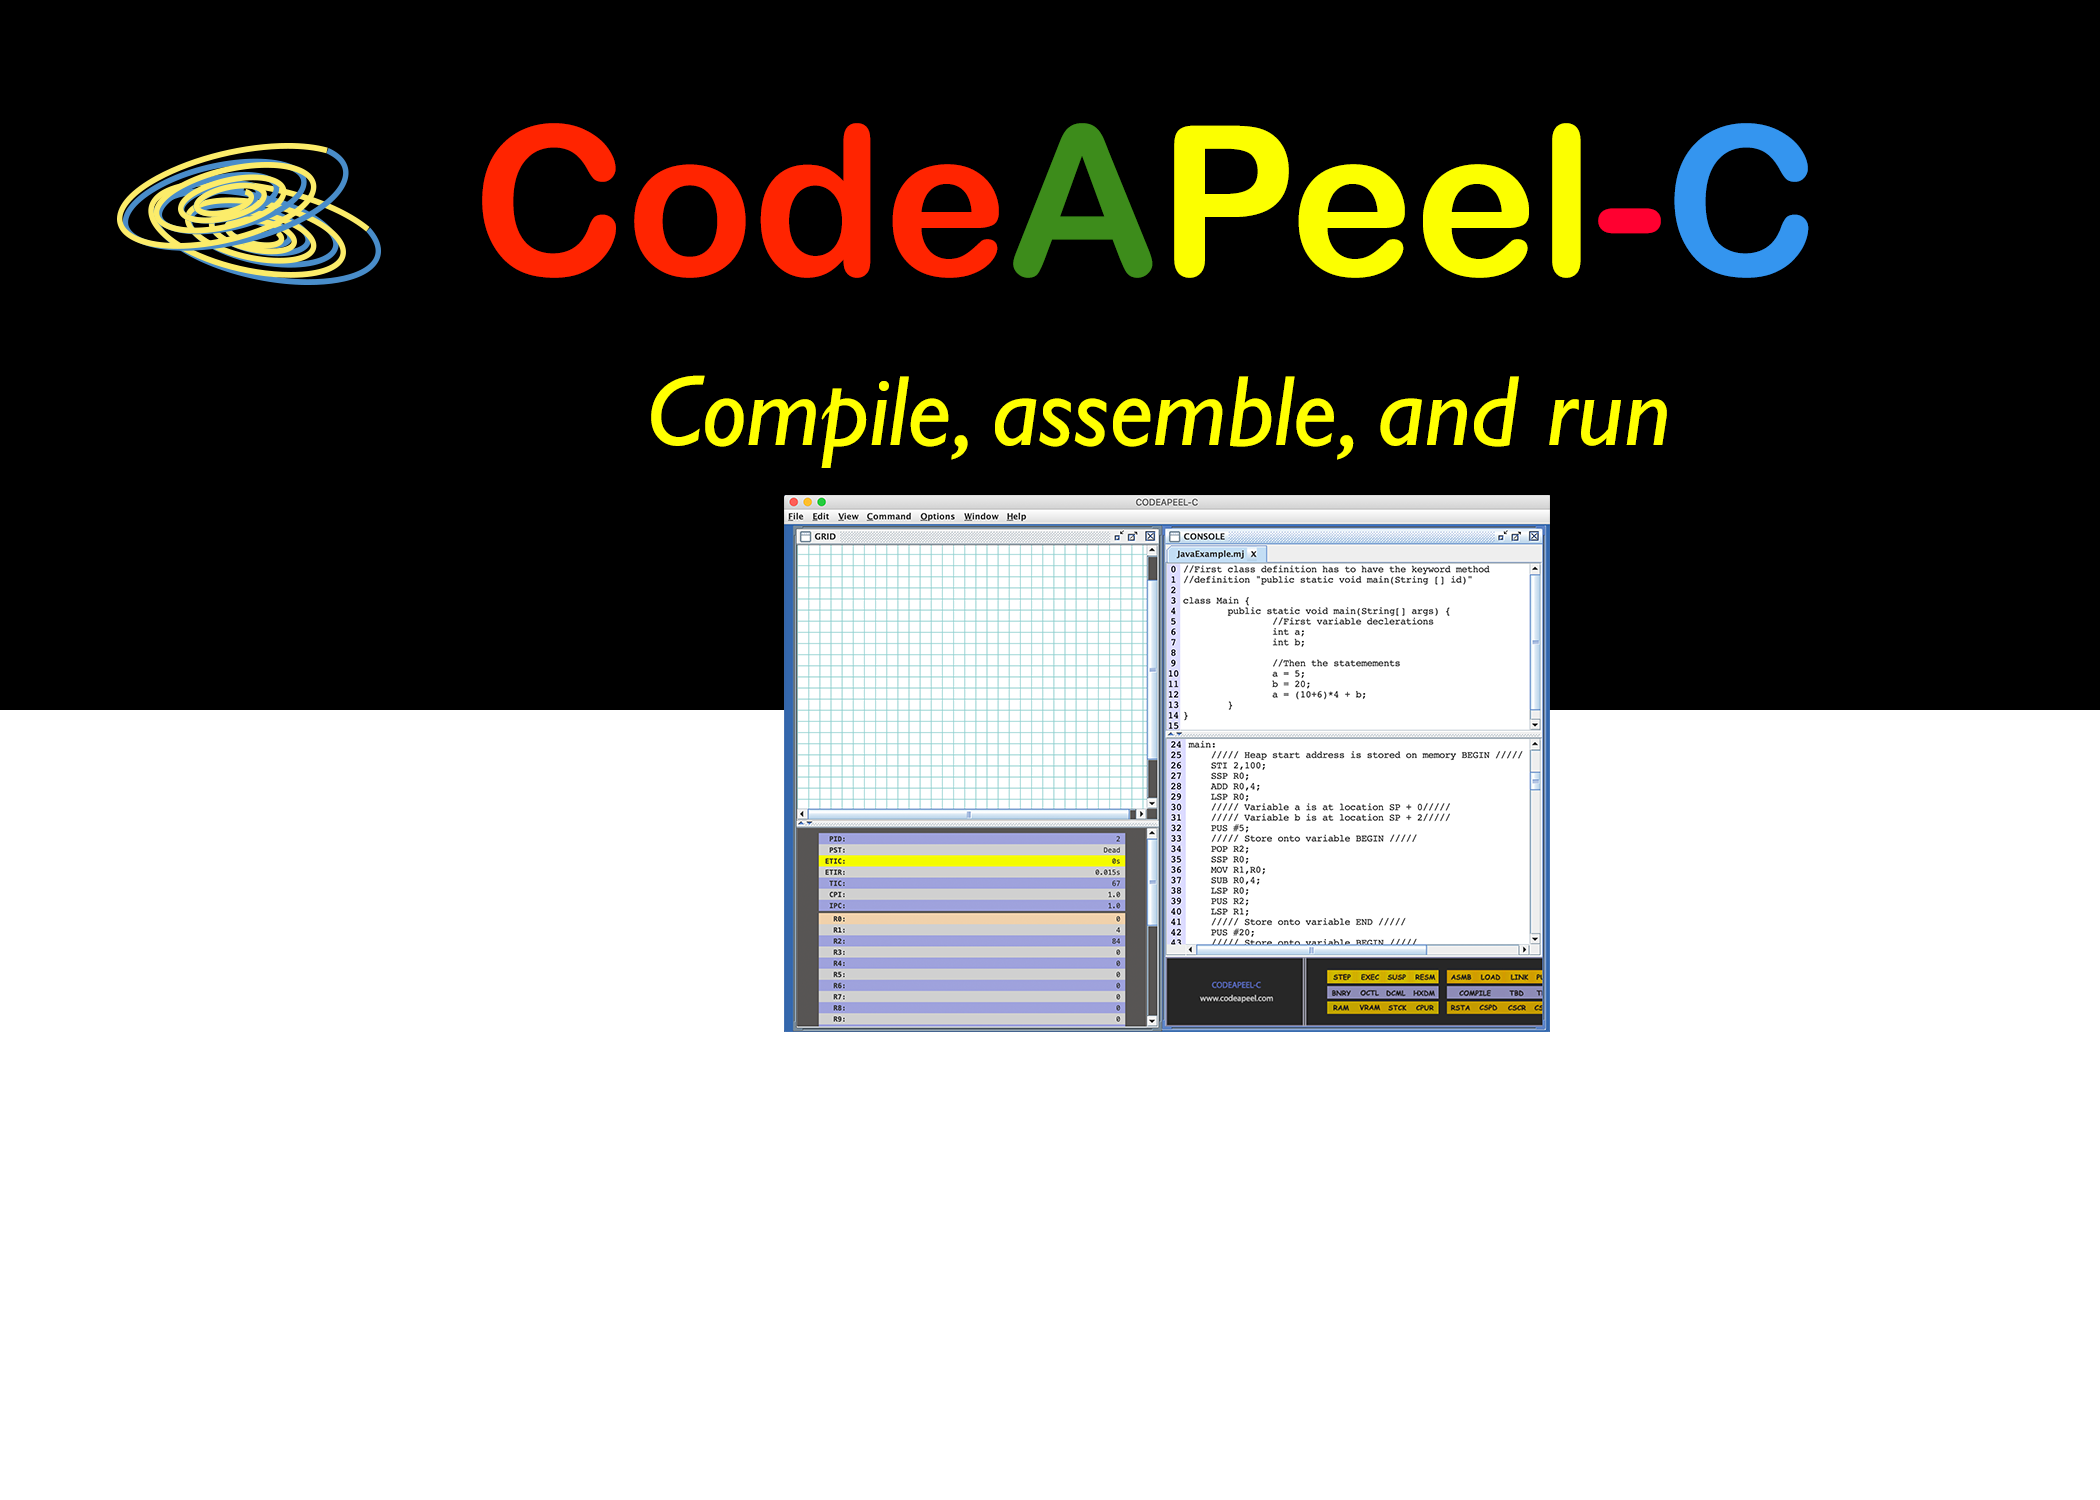 CodeAPeel